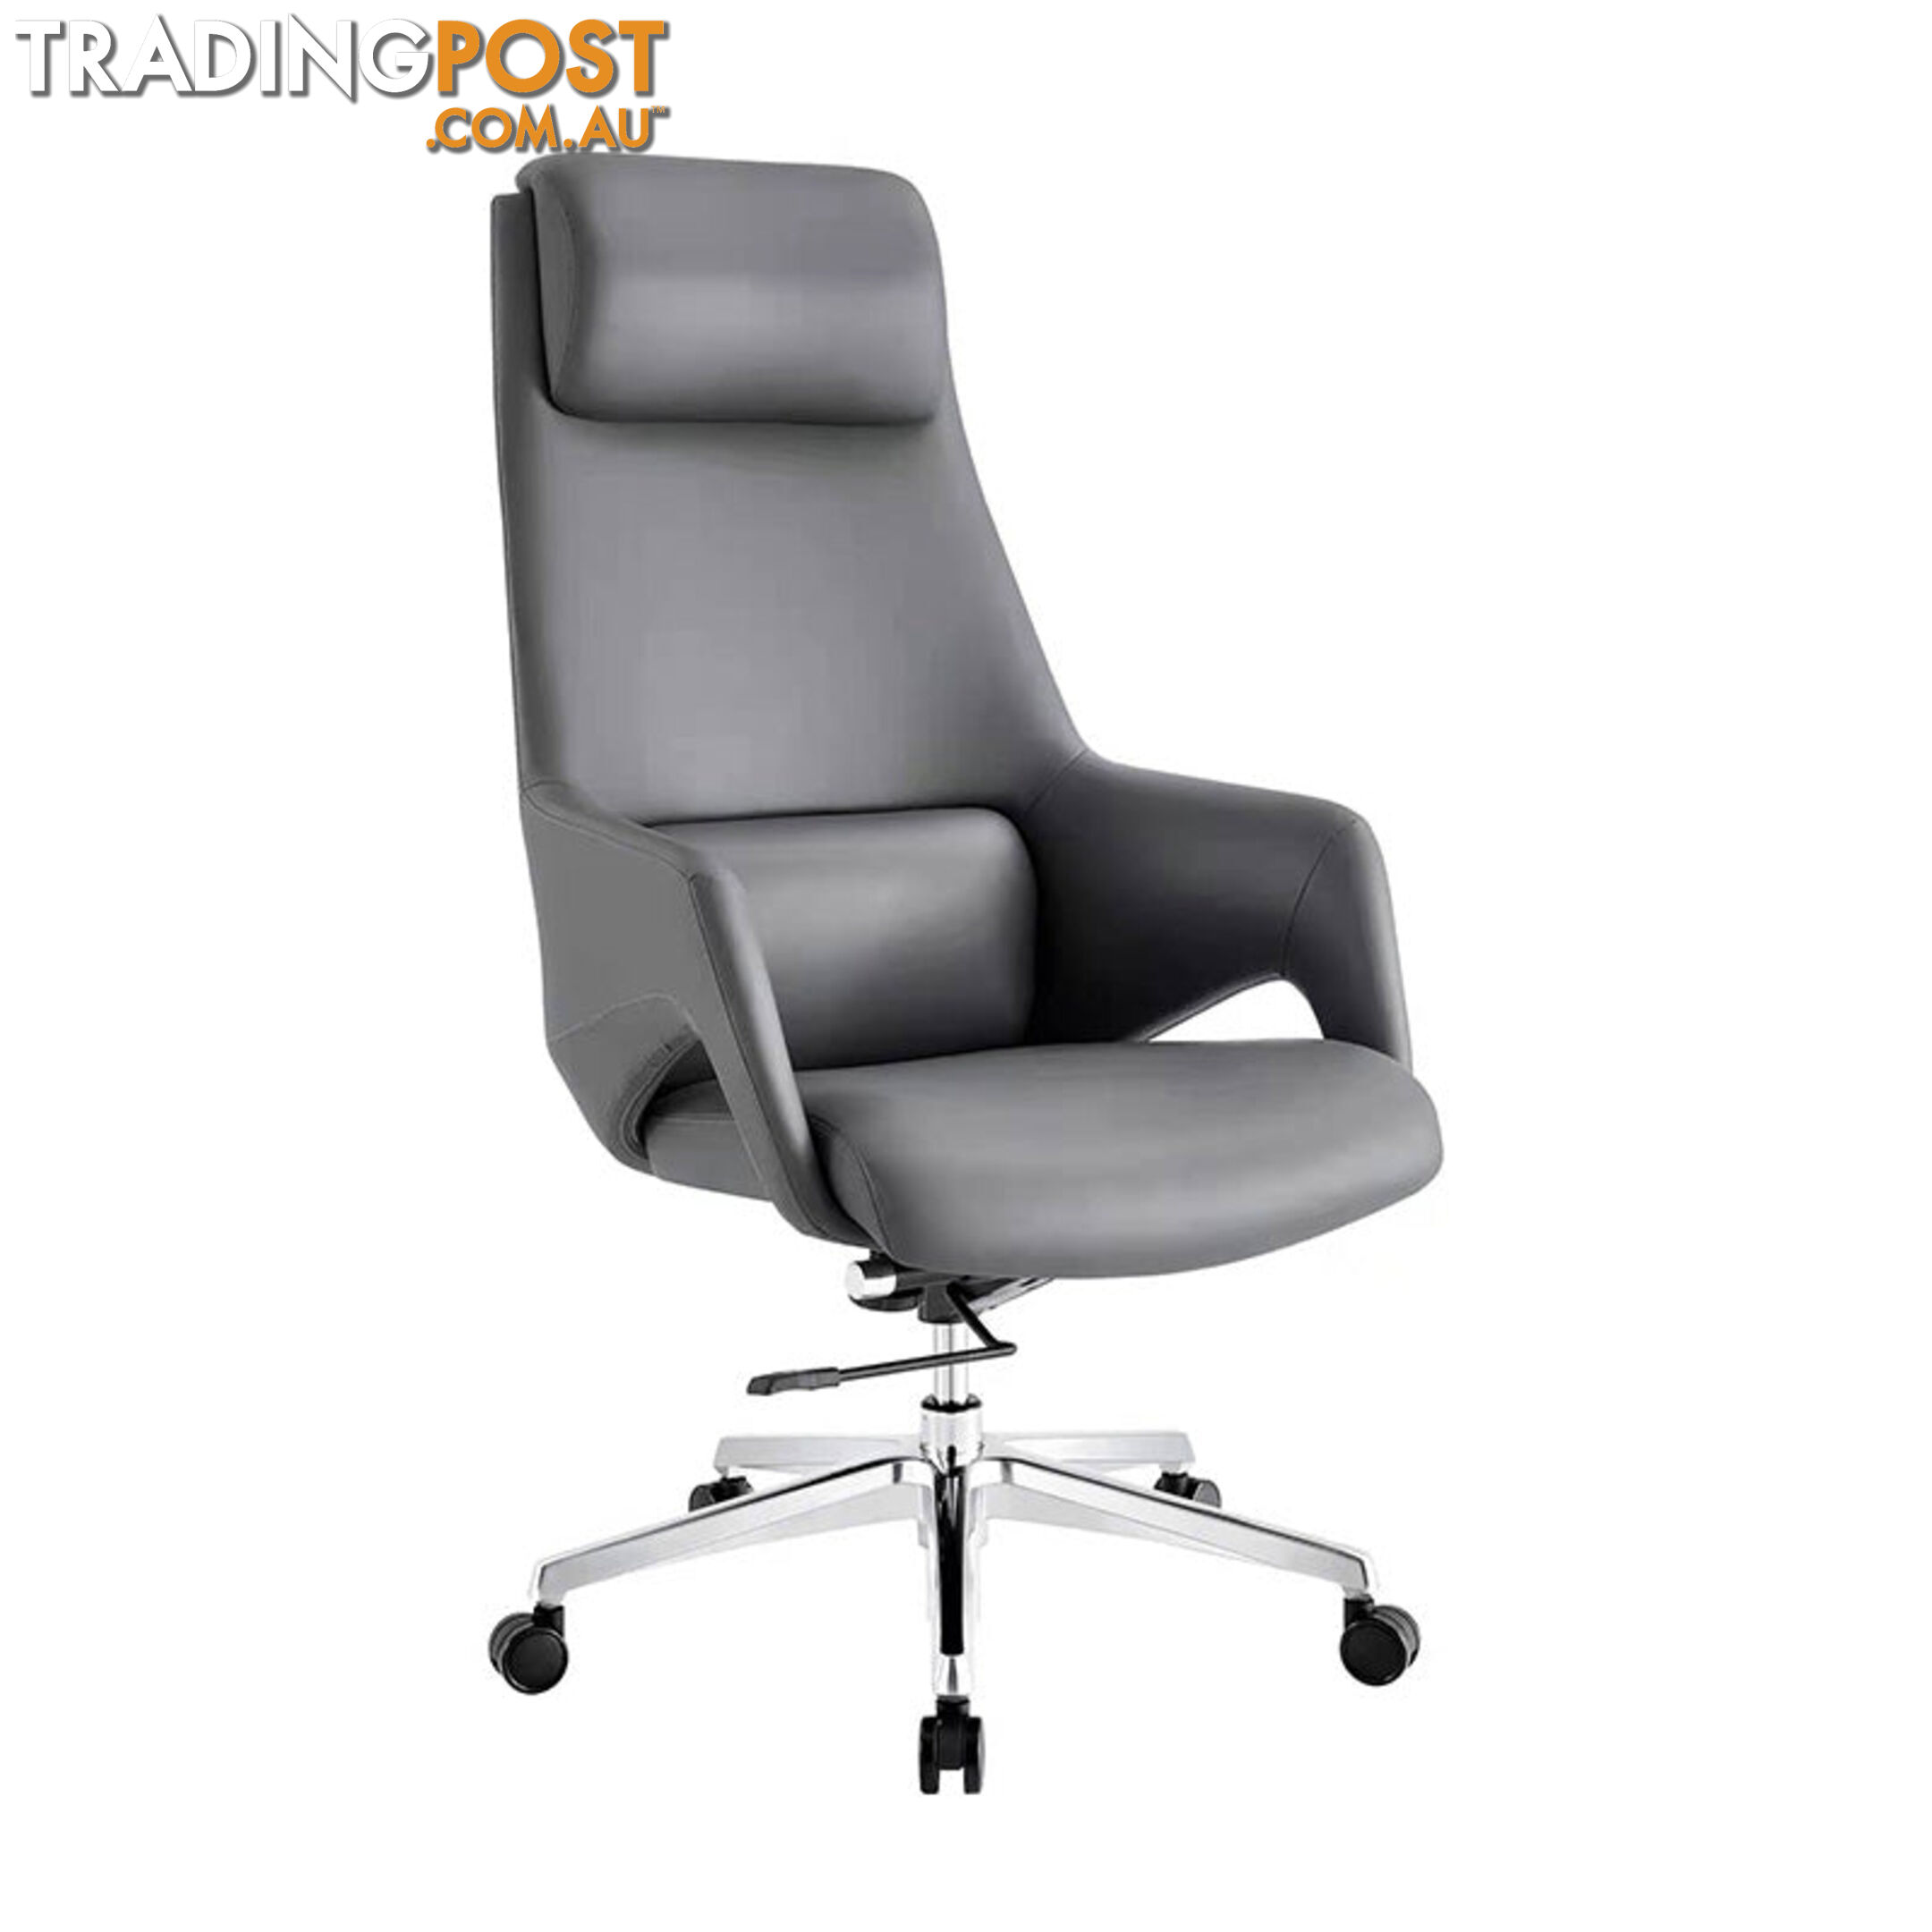 RONAN Executive Office Chair - Grey - WF-PY07 - 9334719012049